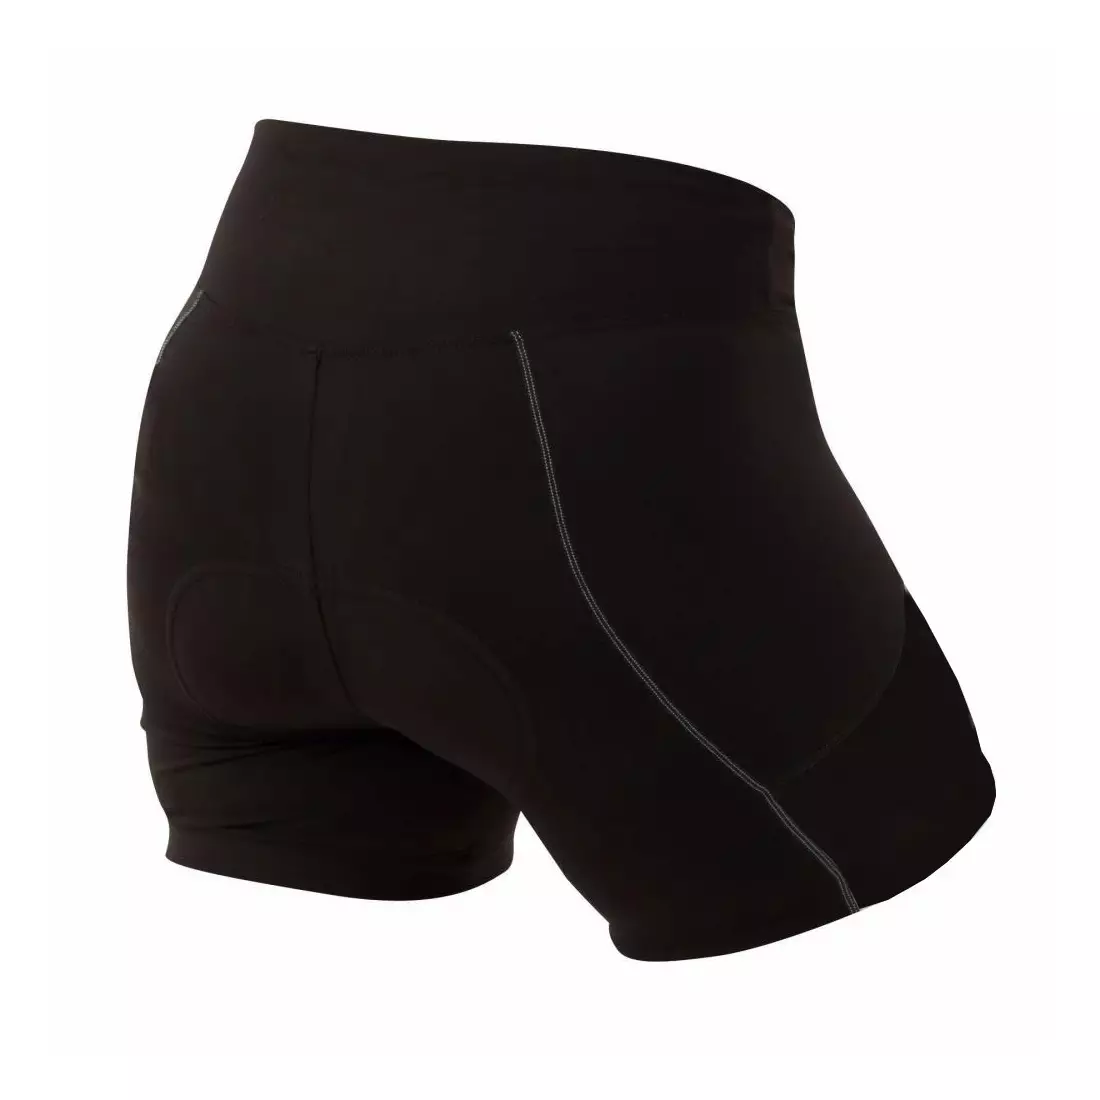 PEARL IZUMI - 11211314-3GJ SUGAR - women's cycling shorts